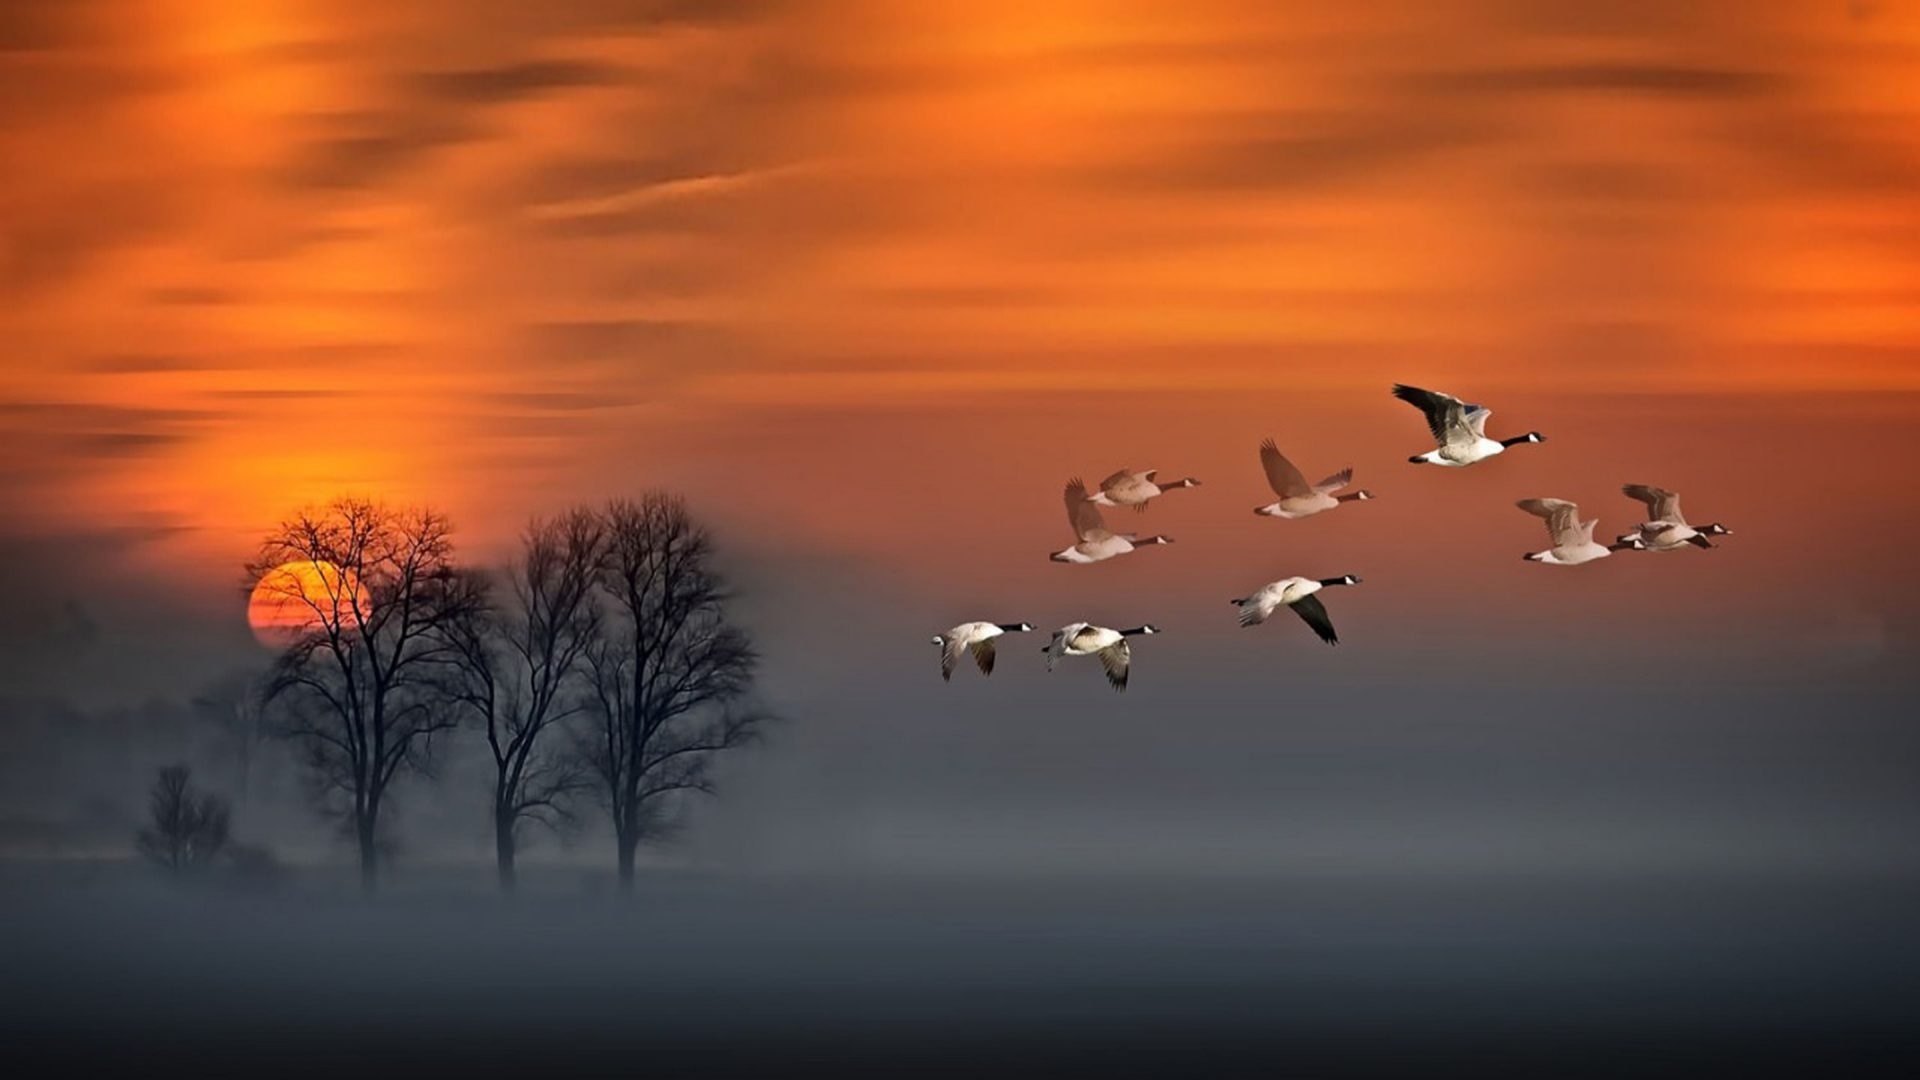 Wedge Birds In The Sky Image